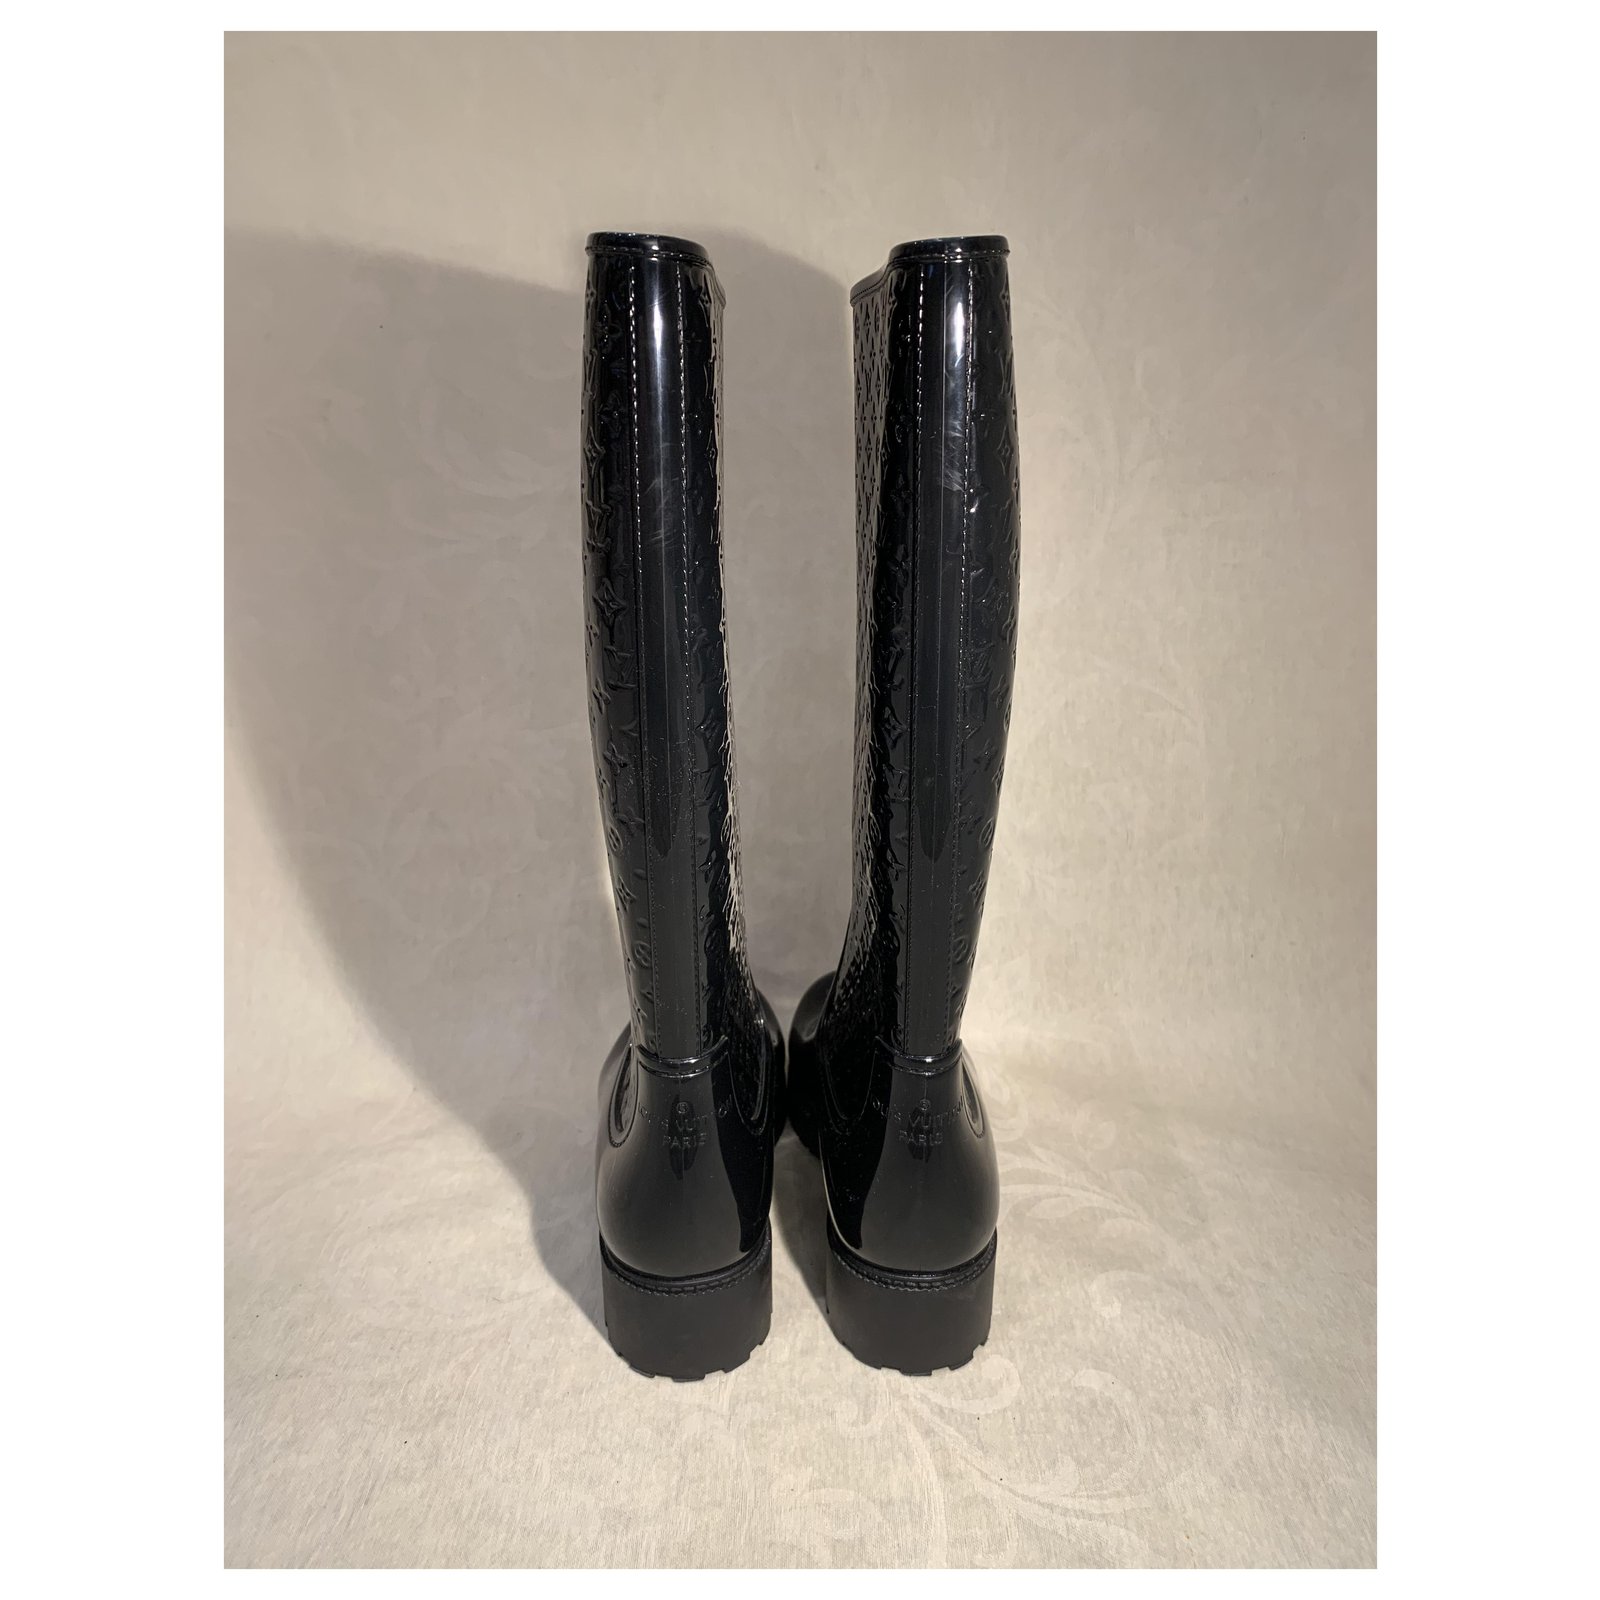 Louis Vuitton - Authenticated Drops Boots - Rubber Black Plain for Women, Very Good Condition